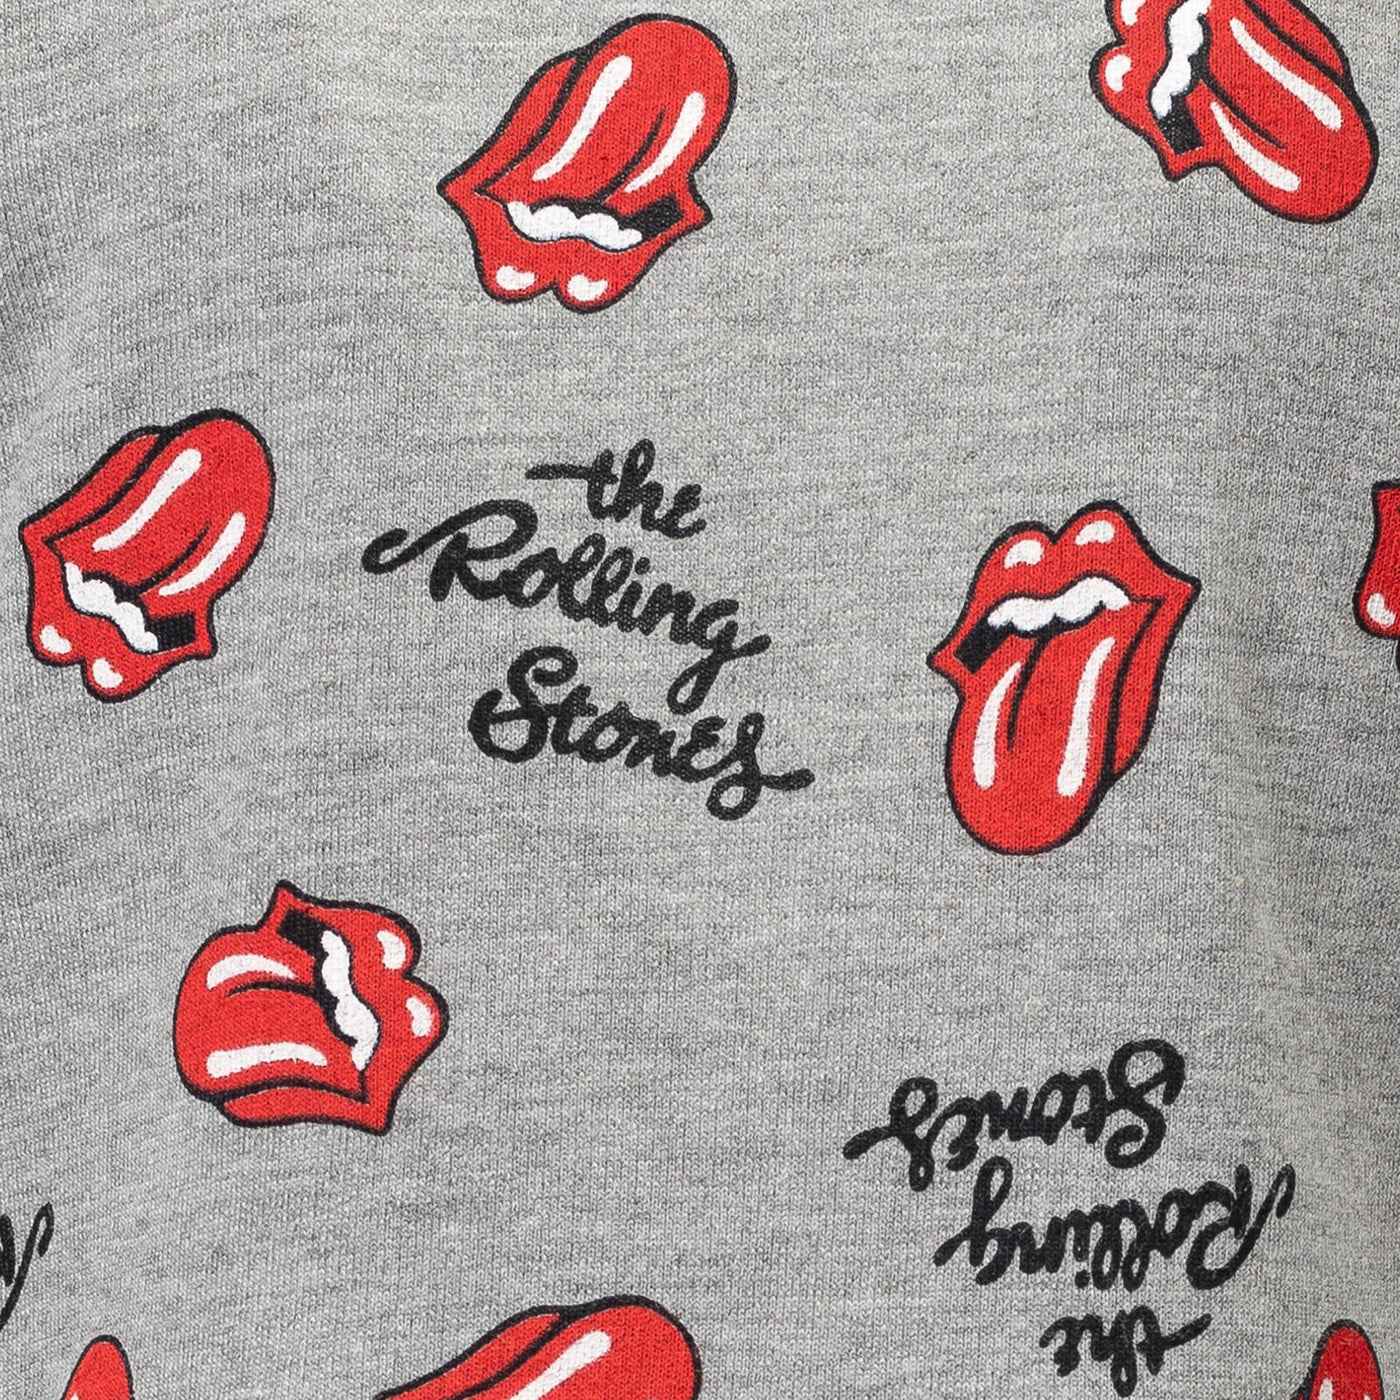 Rolling Stones Short Sleeve Dress